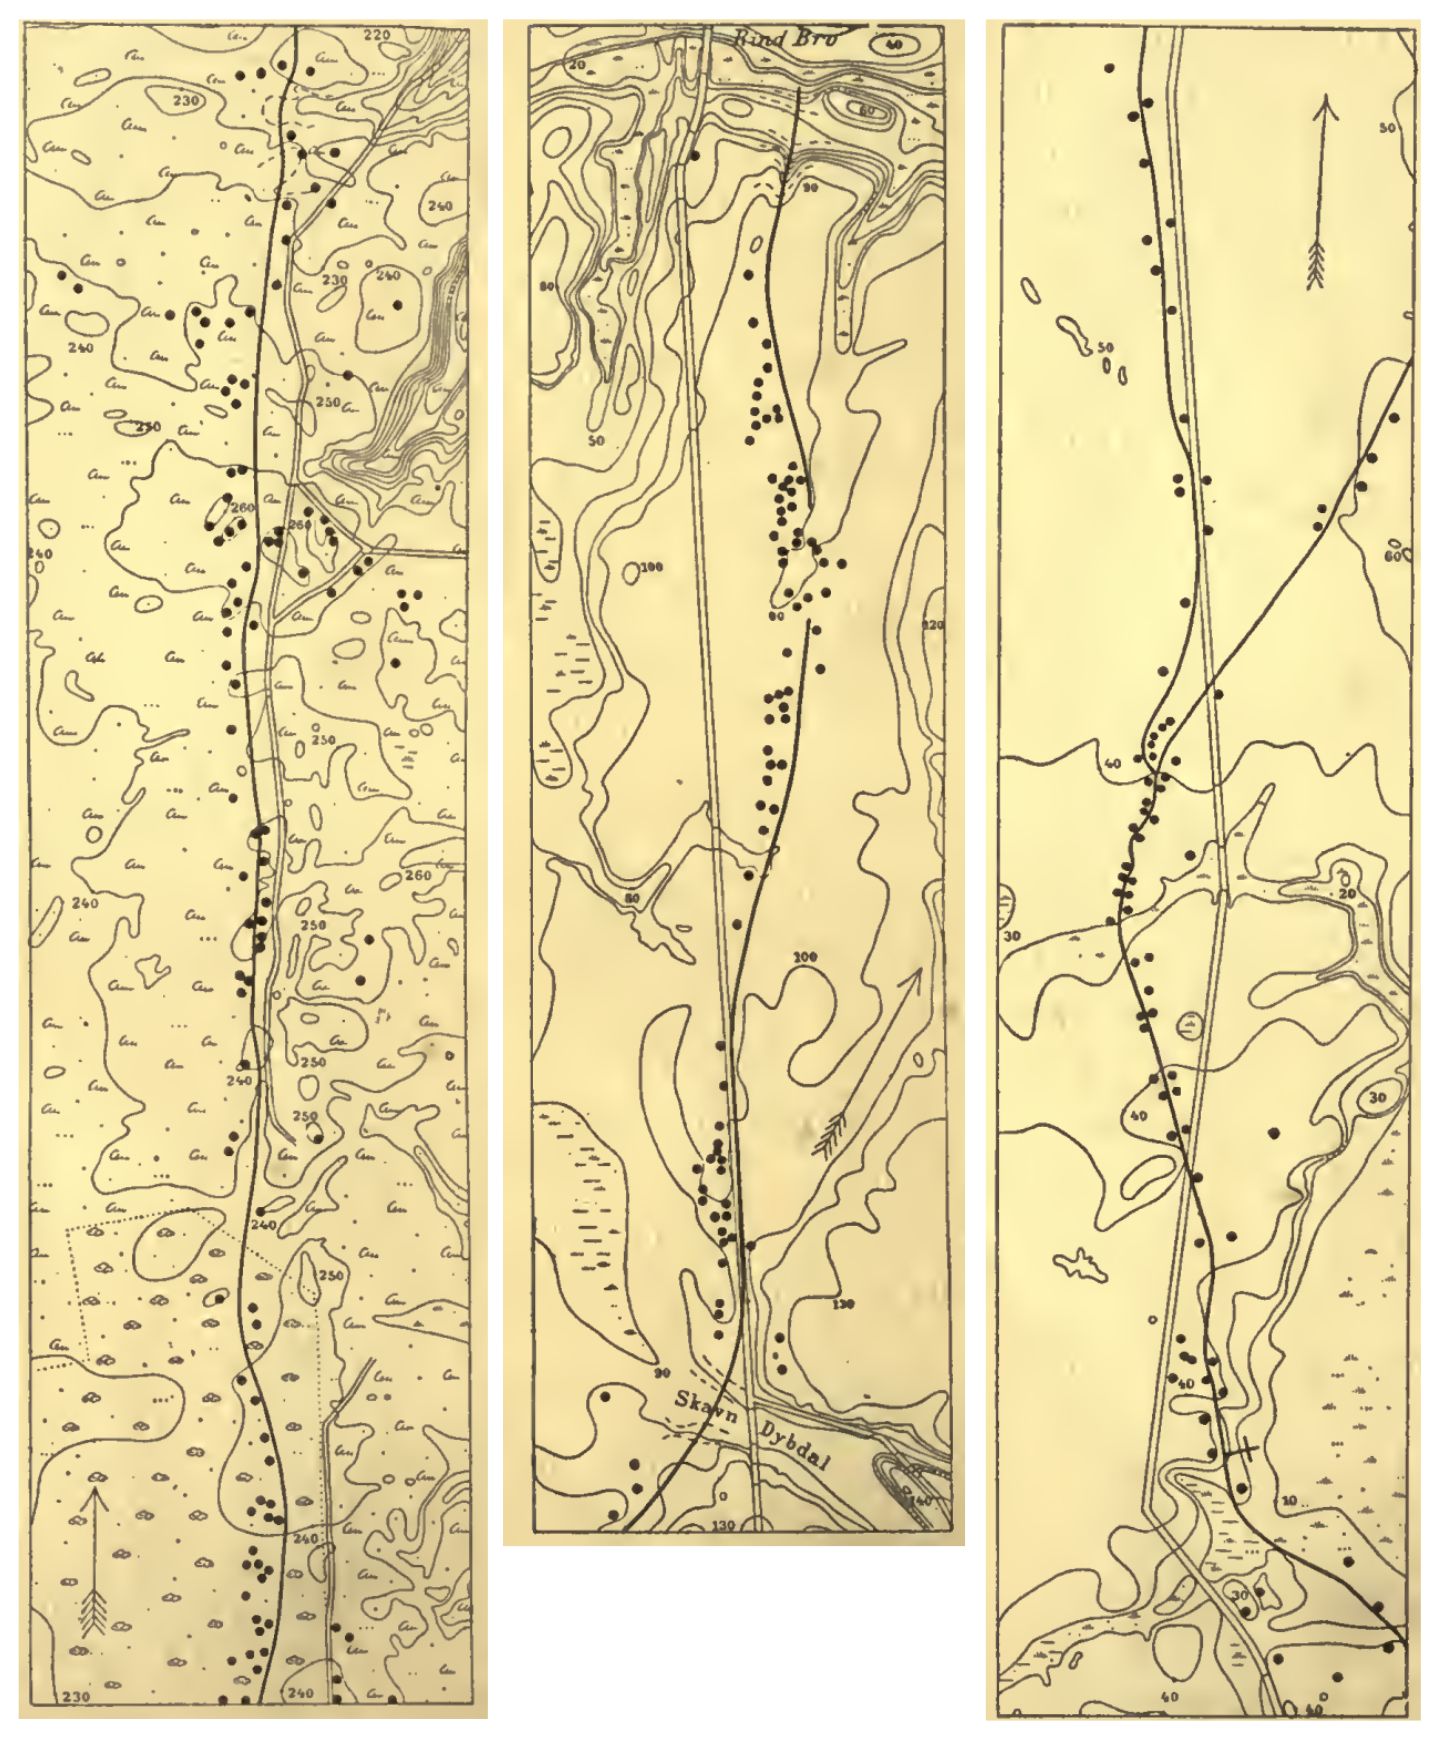 Müller 1904 - paths